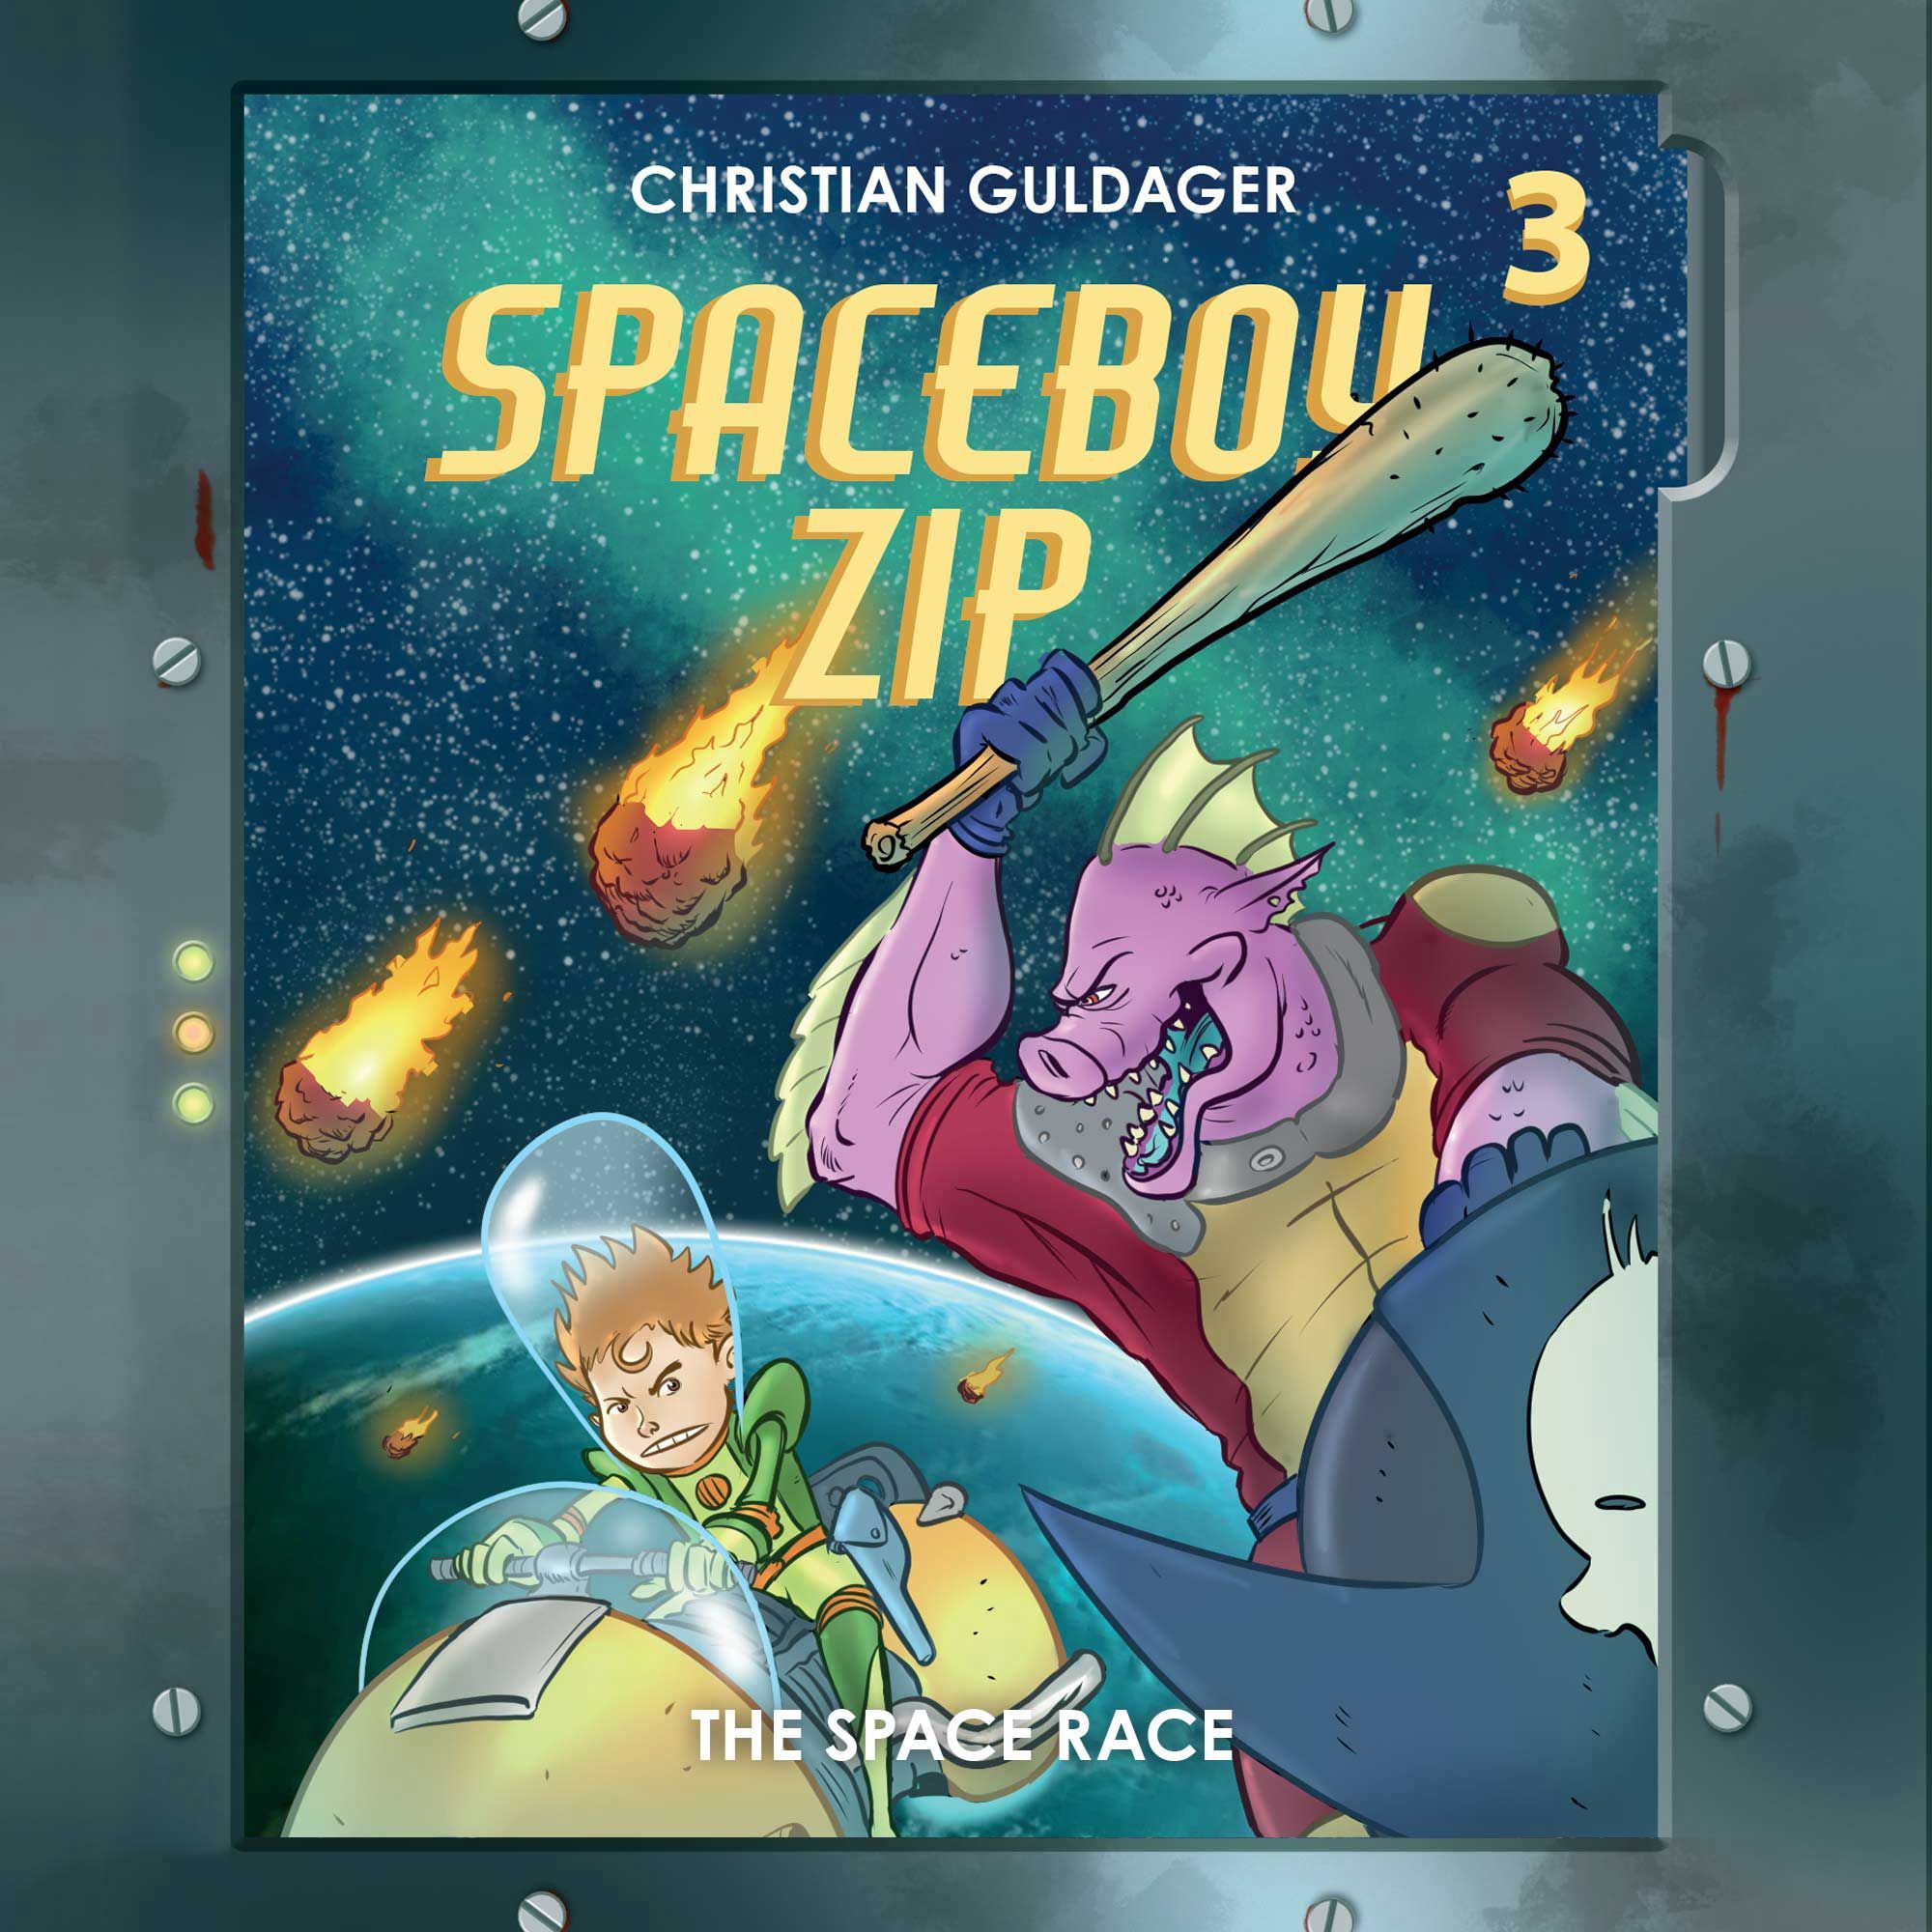 Spaceboy Zip #3: The Space Race, lydbog af Christian Guldager